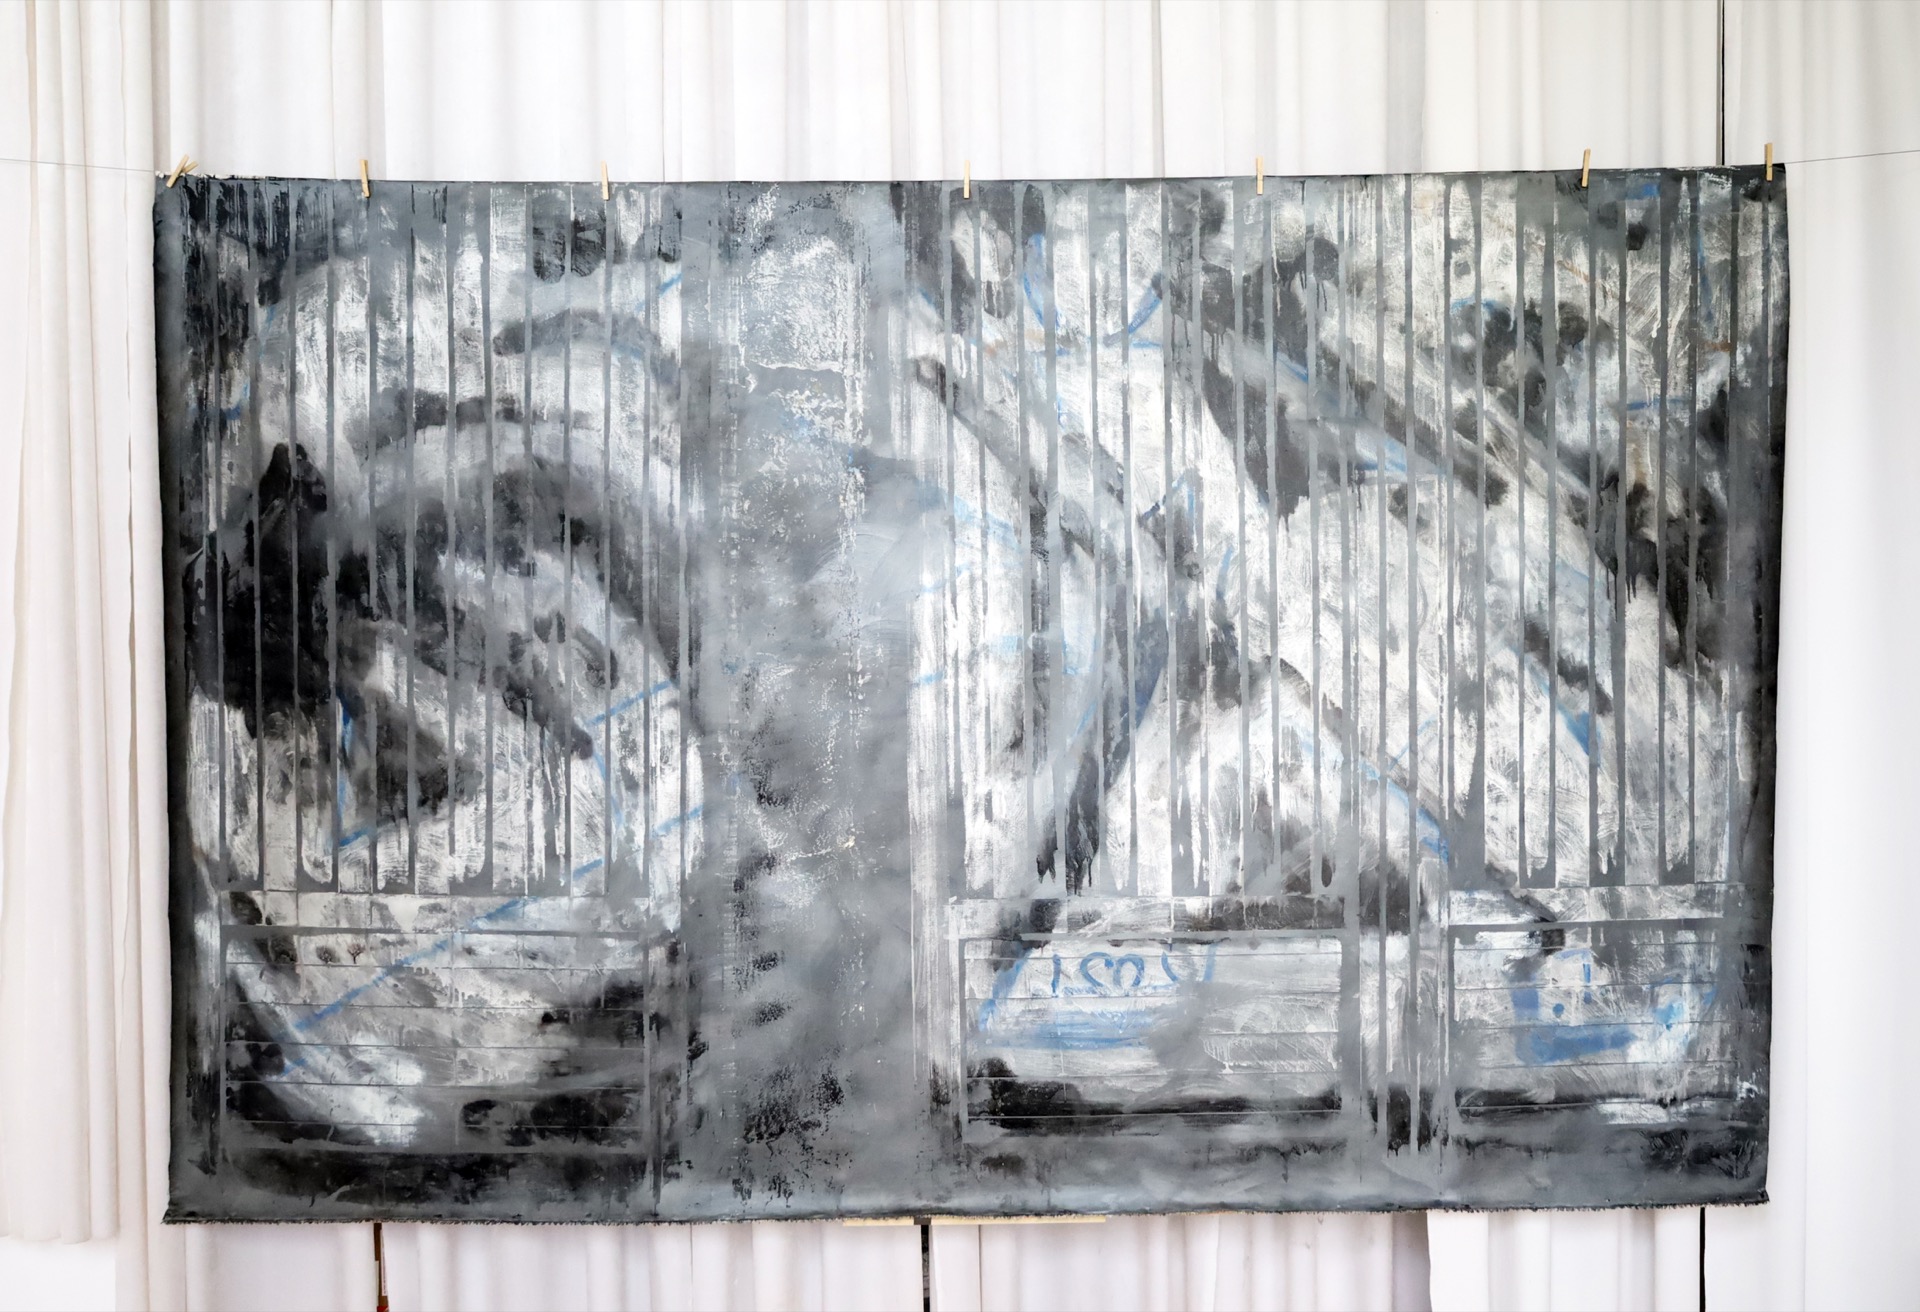 Jakob Traxlmayr - Economy, 2022, 330 x 215 cm | Spray paint, acrylic on canvas